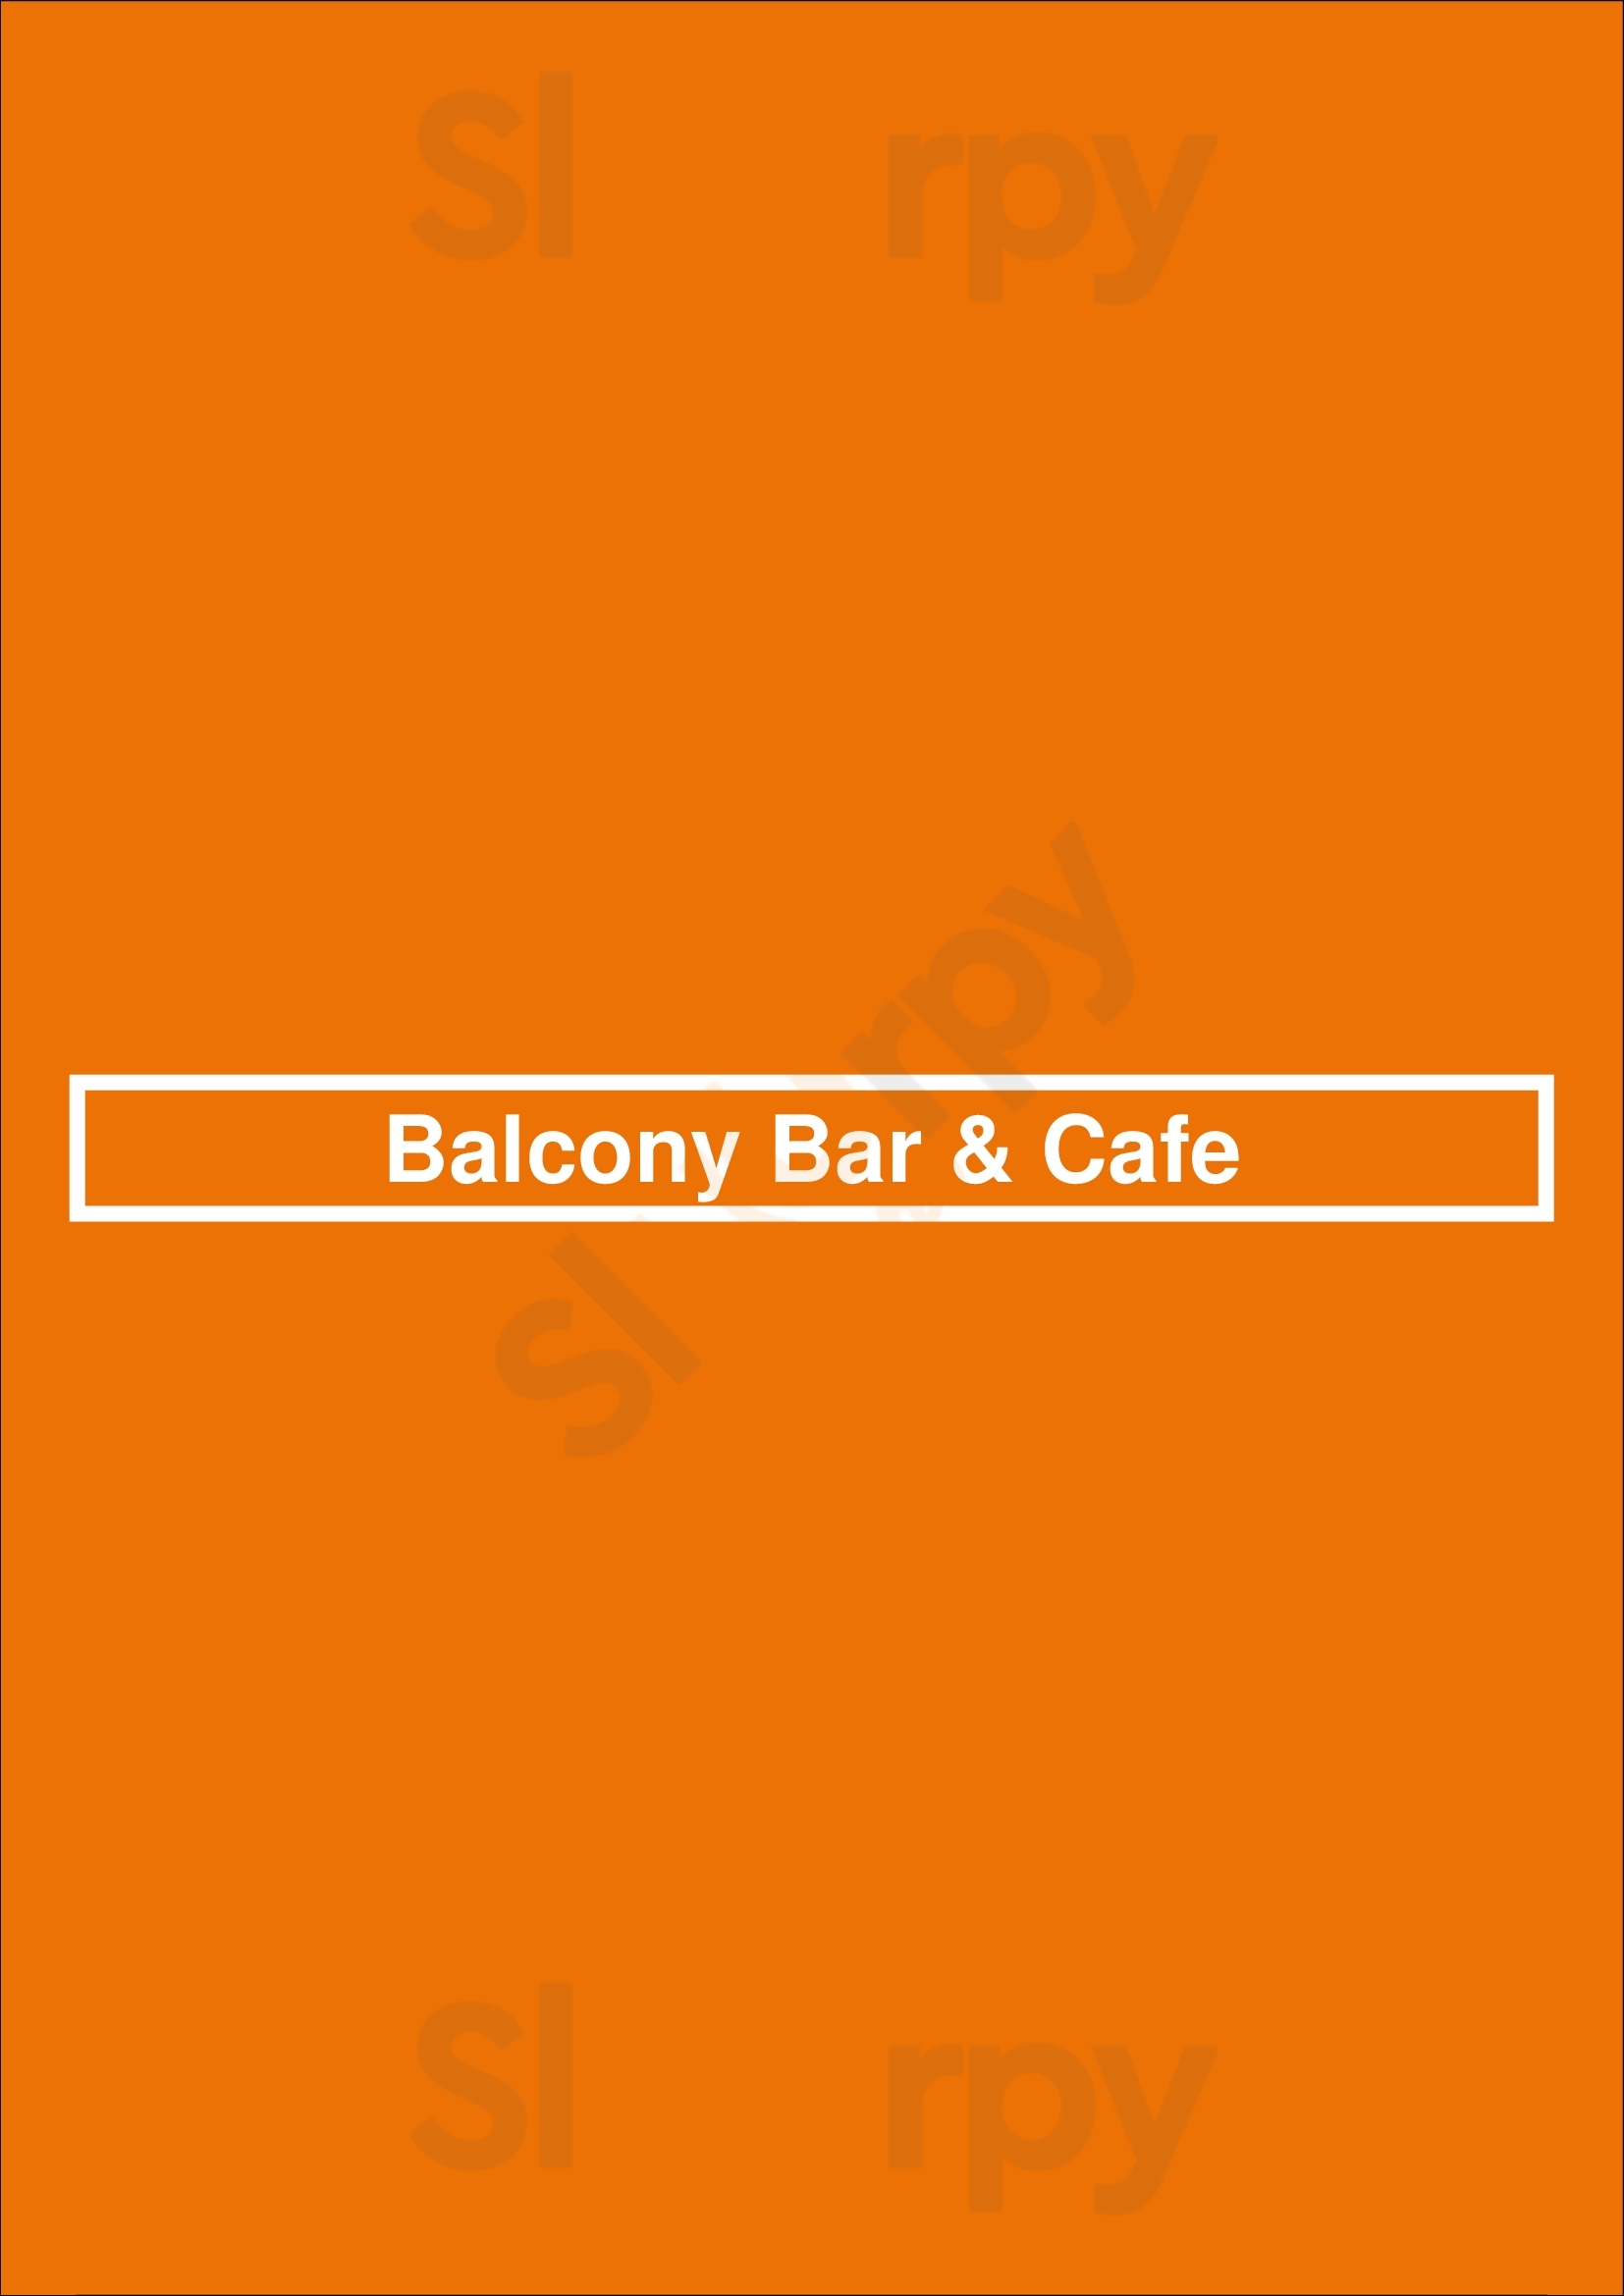 Balcony Bar & Cafe New Orleans Menu - 1